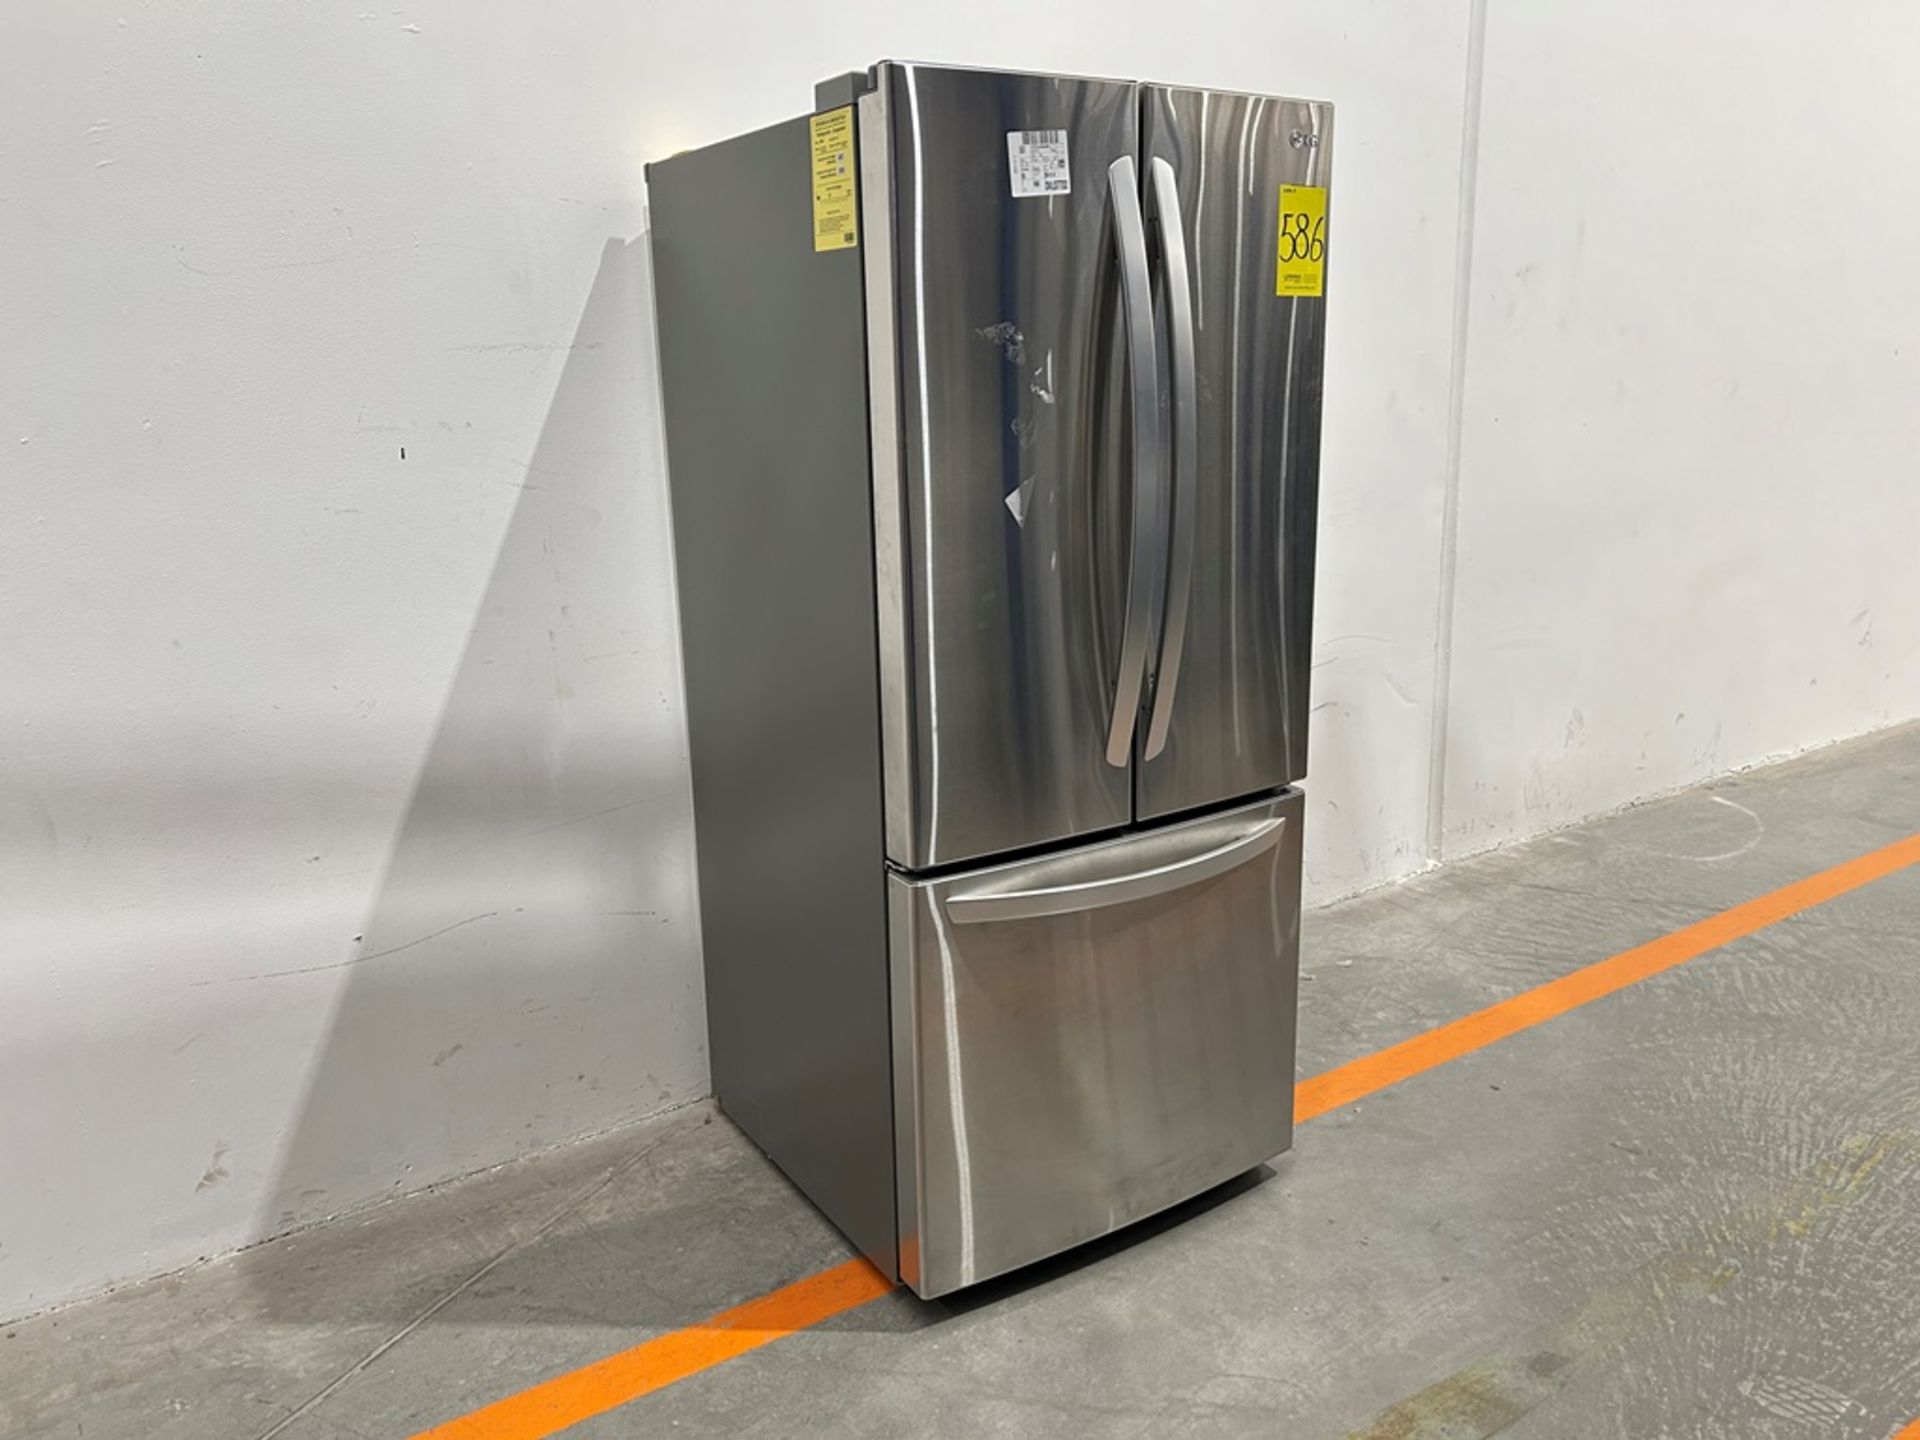 Refrigerador Marca LG, Modelo GF22BGSK, Serie 49652, Color GRIS (Favor de inspeccionar) - Image 3 of 11